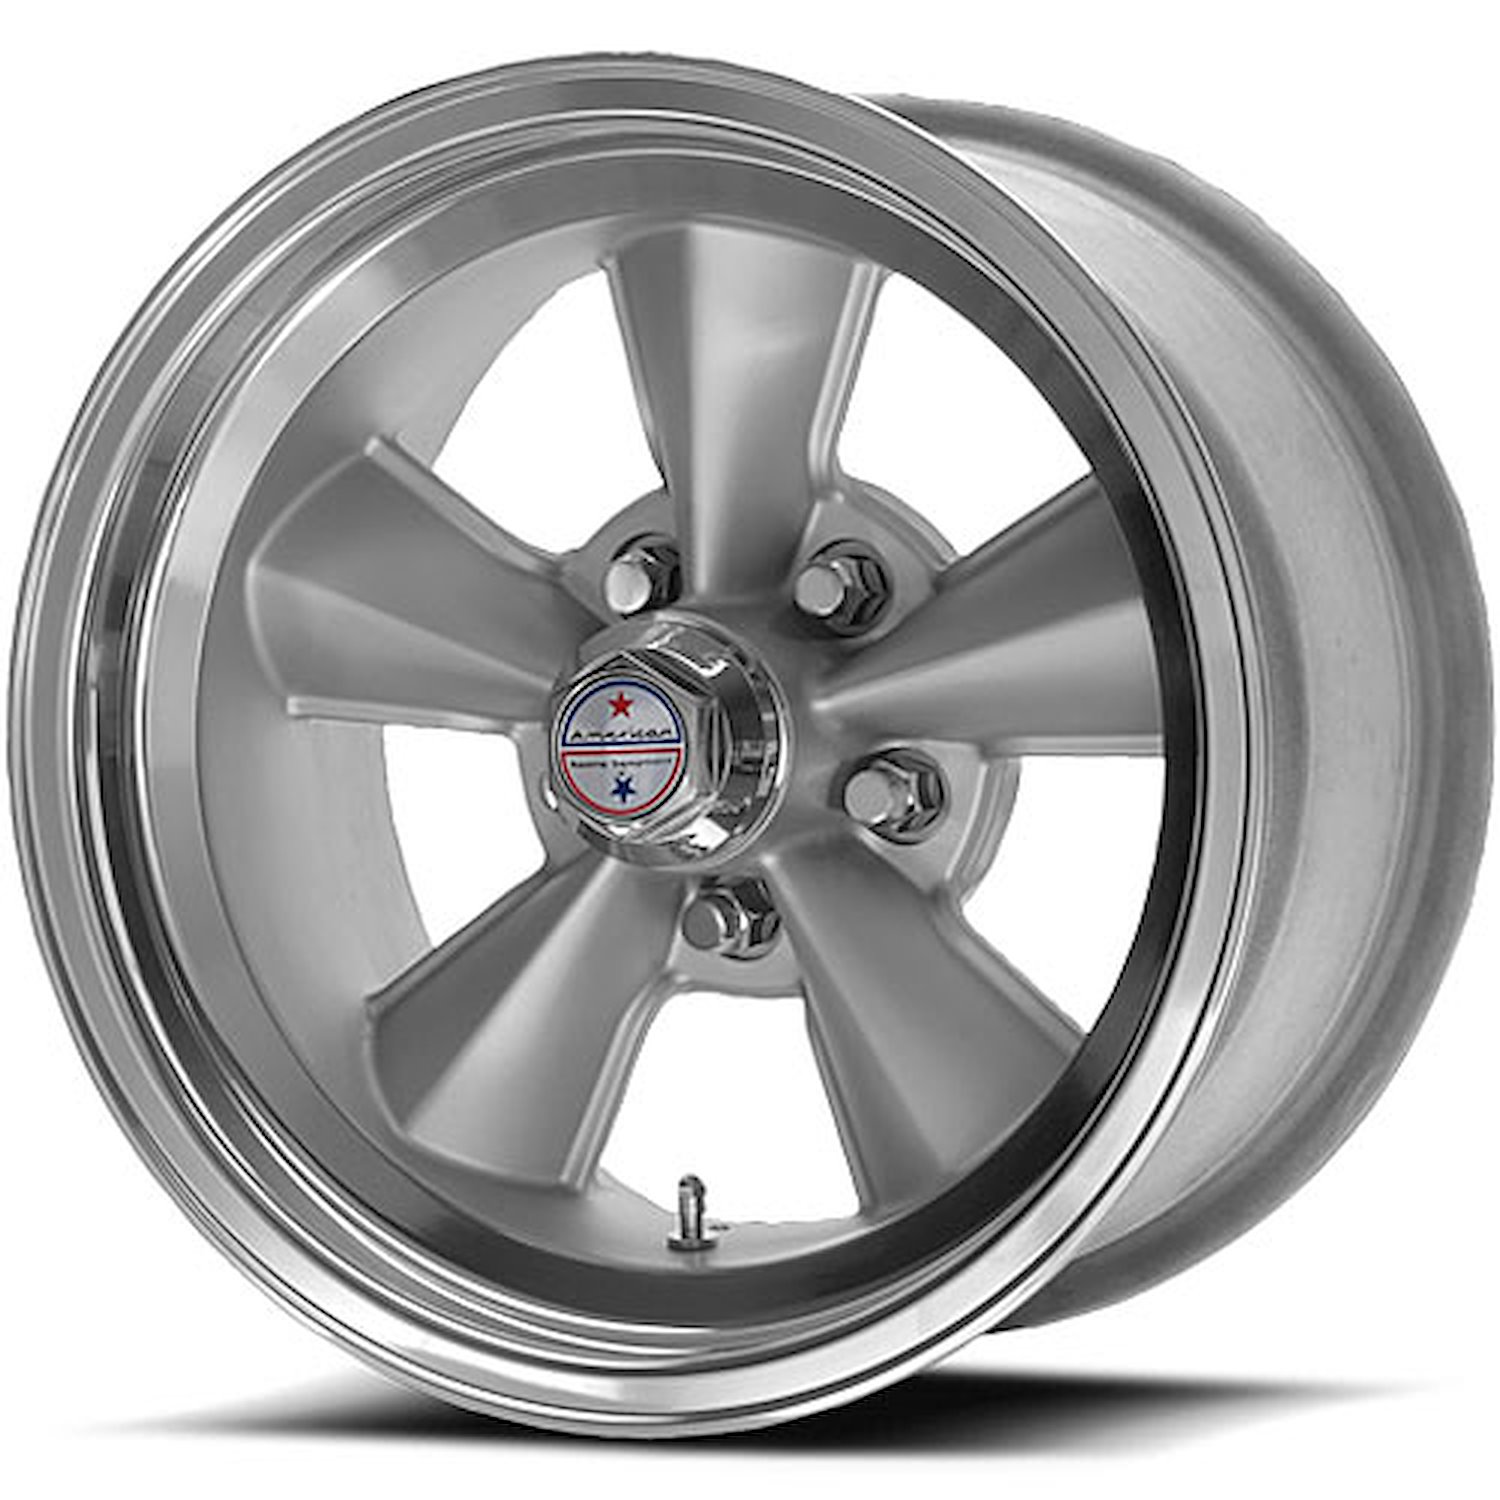 VNT70R Series Wheel Size: 15" x 7"